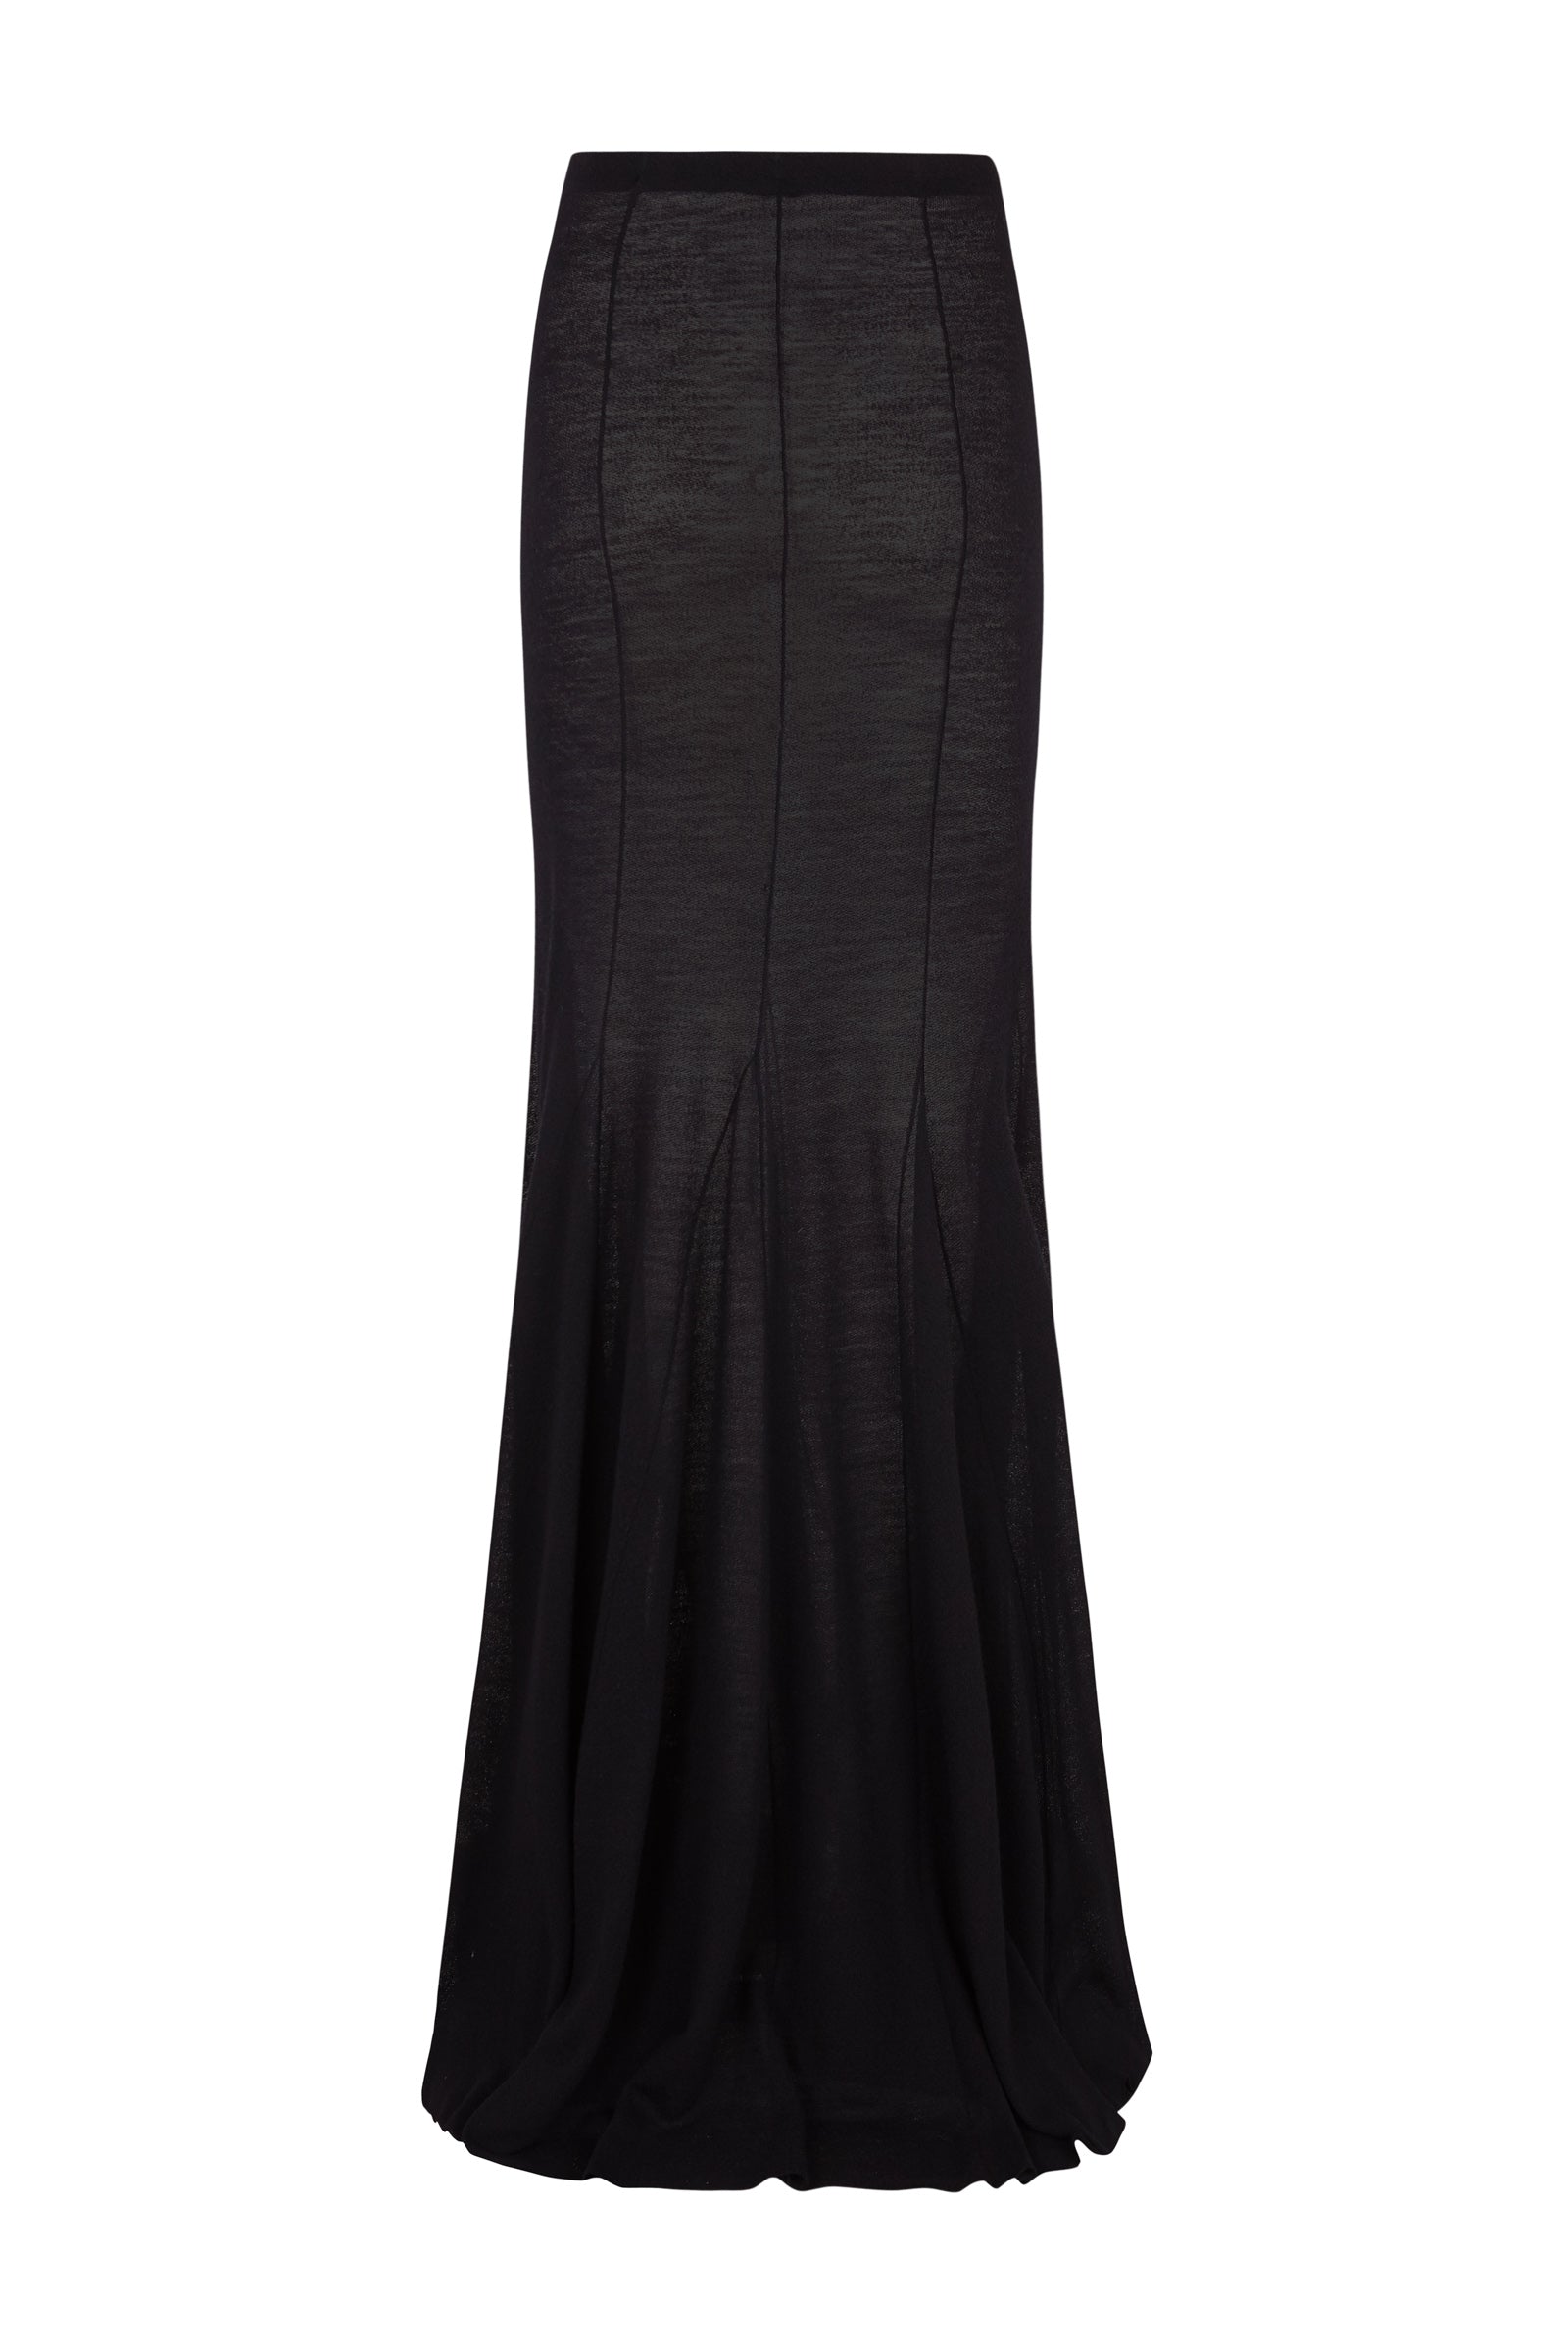 Cortana - Jenna, skirt in black virgin wool